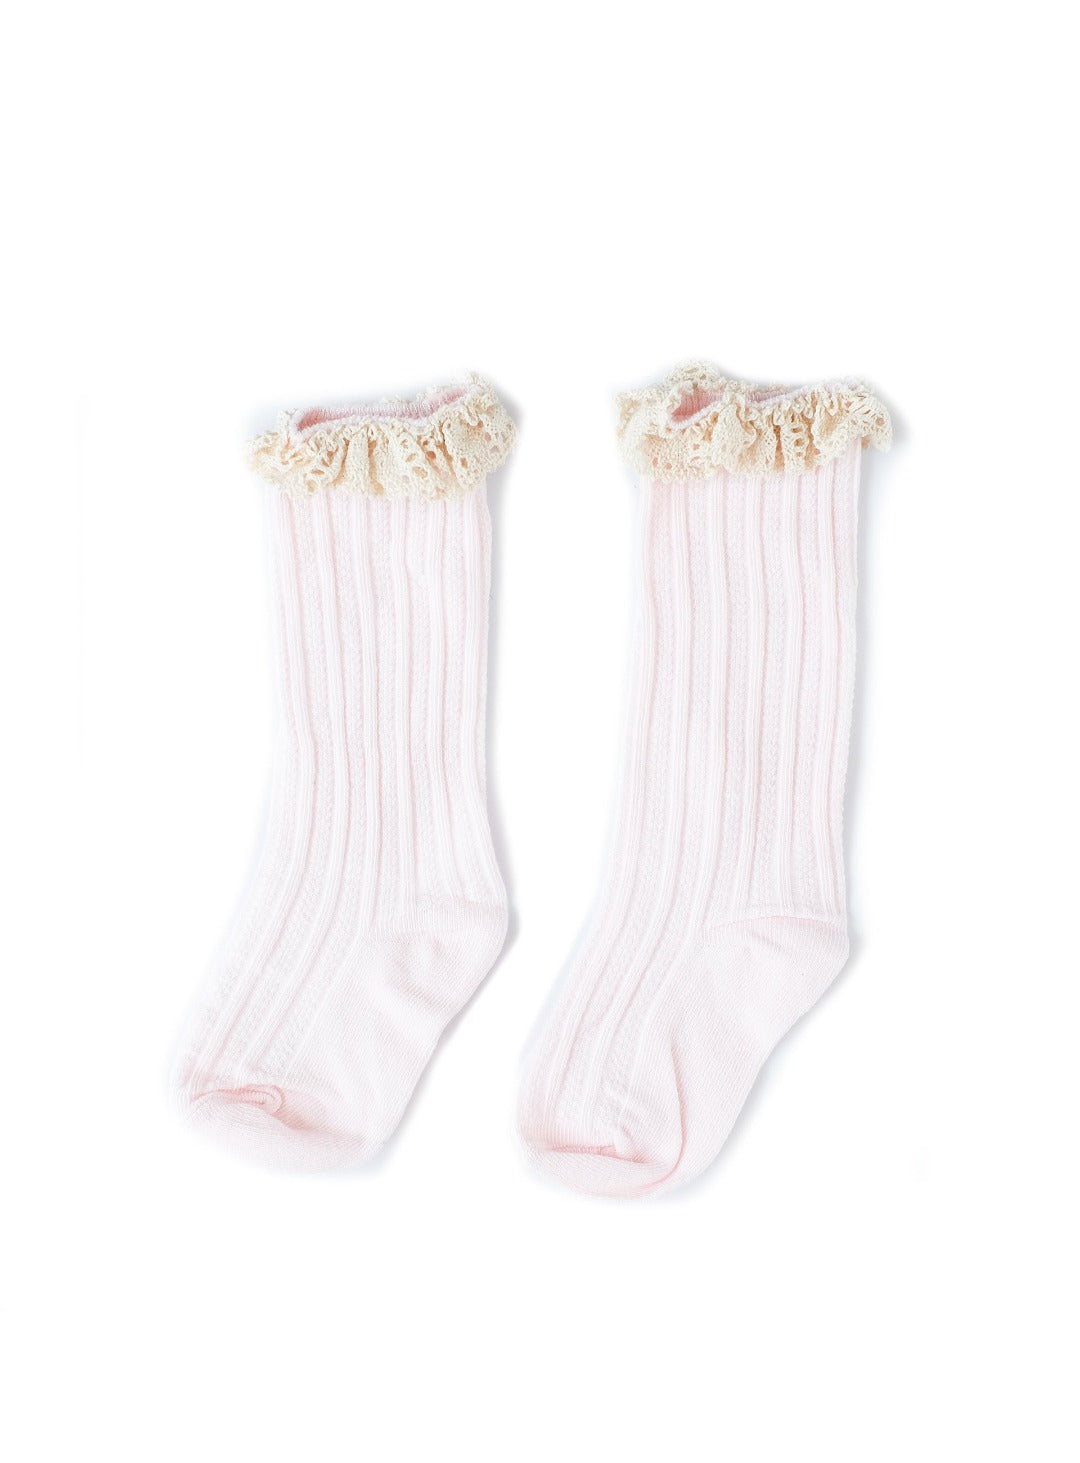 sheer rosebud pink socks with lace